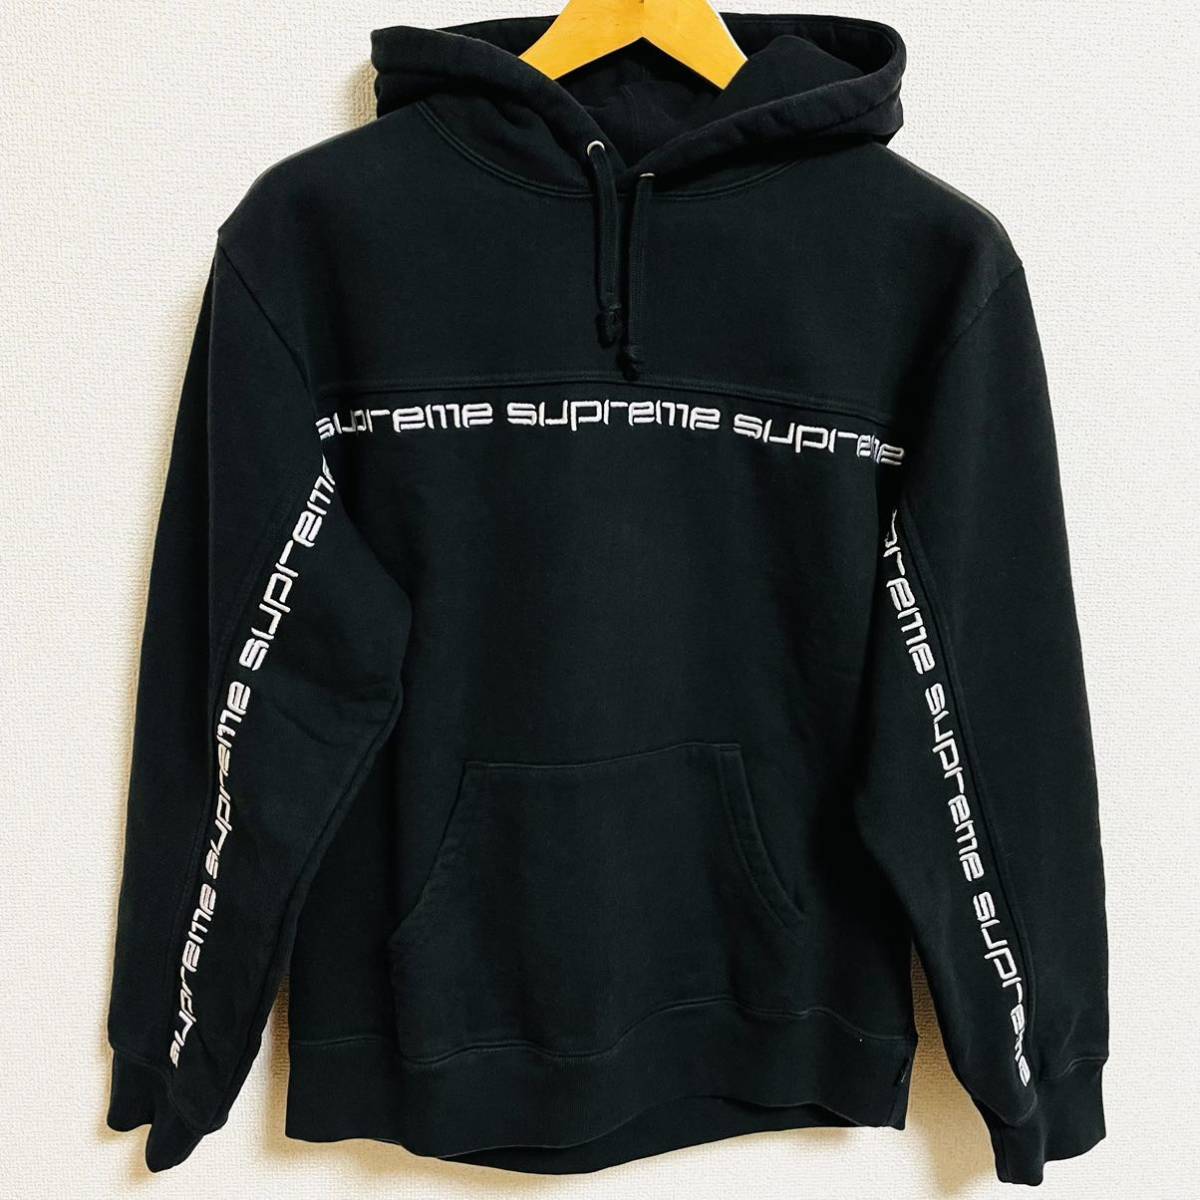 Supreme Text Stripe Hooded Sweatshirt Black White S 18aw 2018年 黒 白 テキスト ストライプ フード スウェットシャツ 袖ロゴ 全身ロゴ